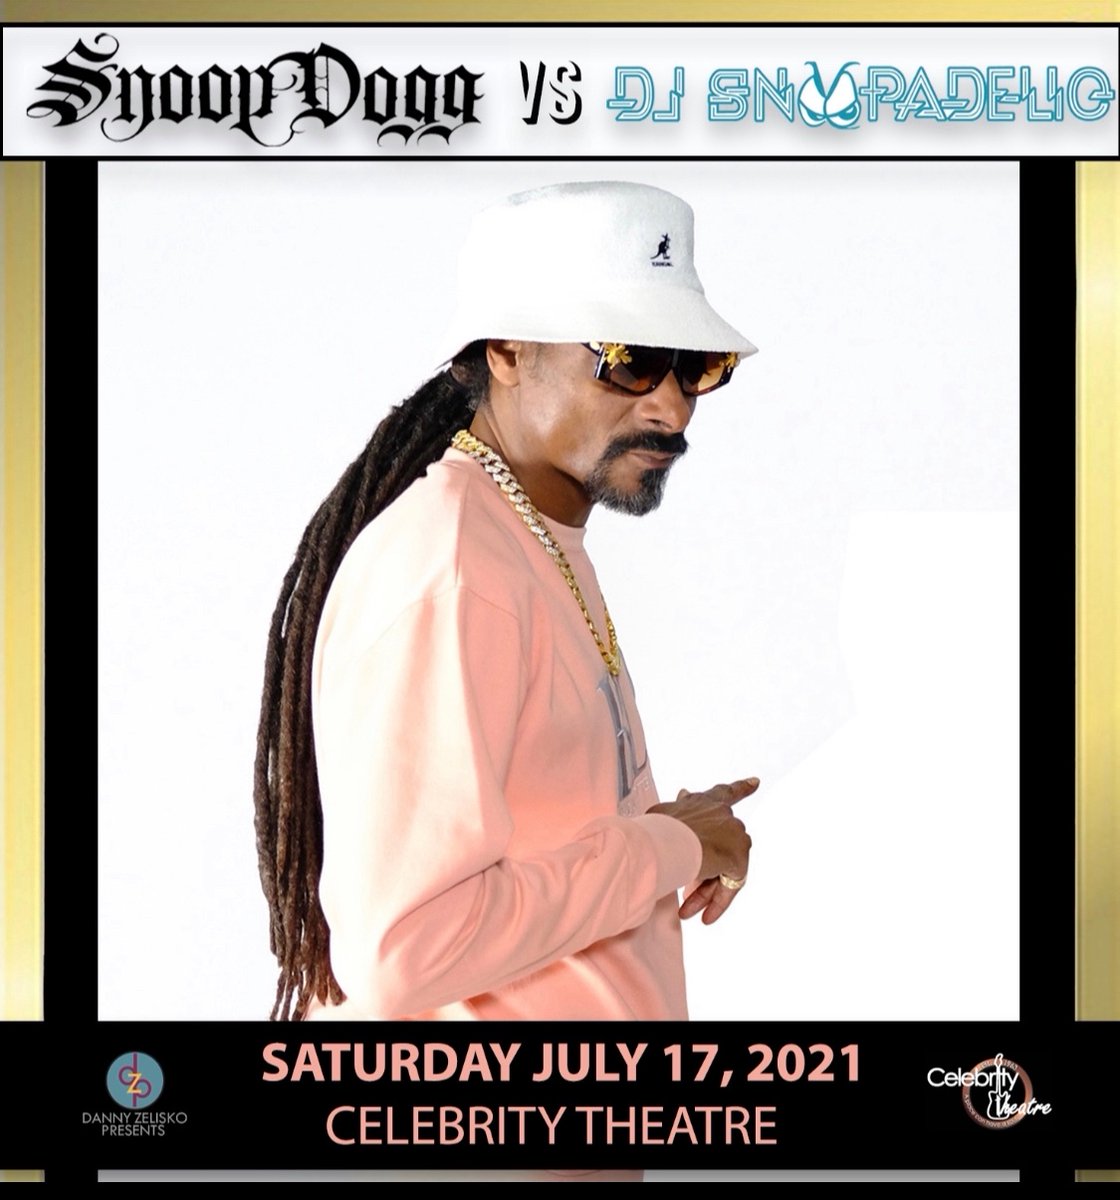 PHX AZ : Snoop Dogg vs Dj Snoopadelic 7/17/21 CELEBRITY THEATRE 